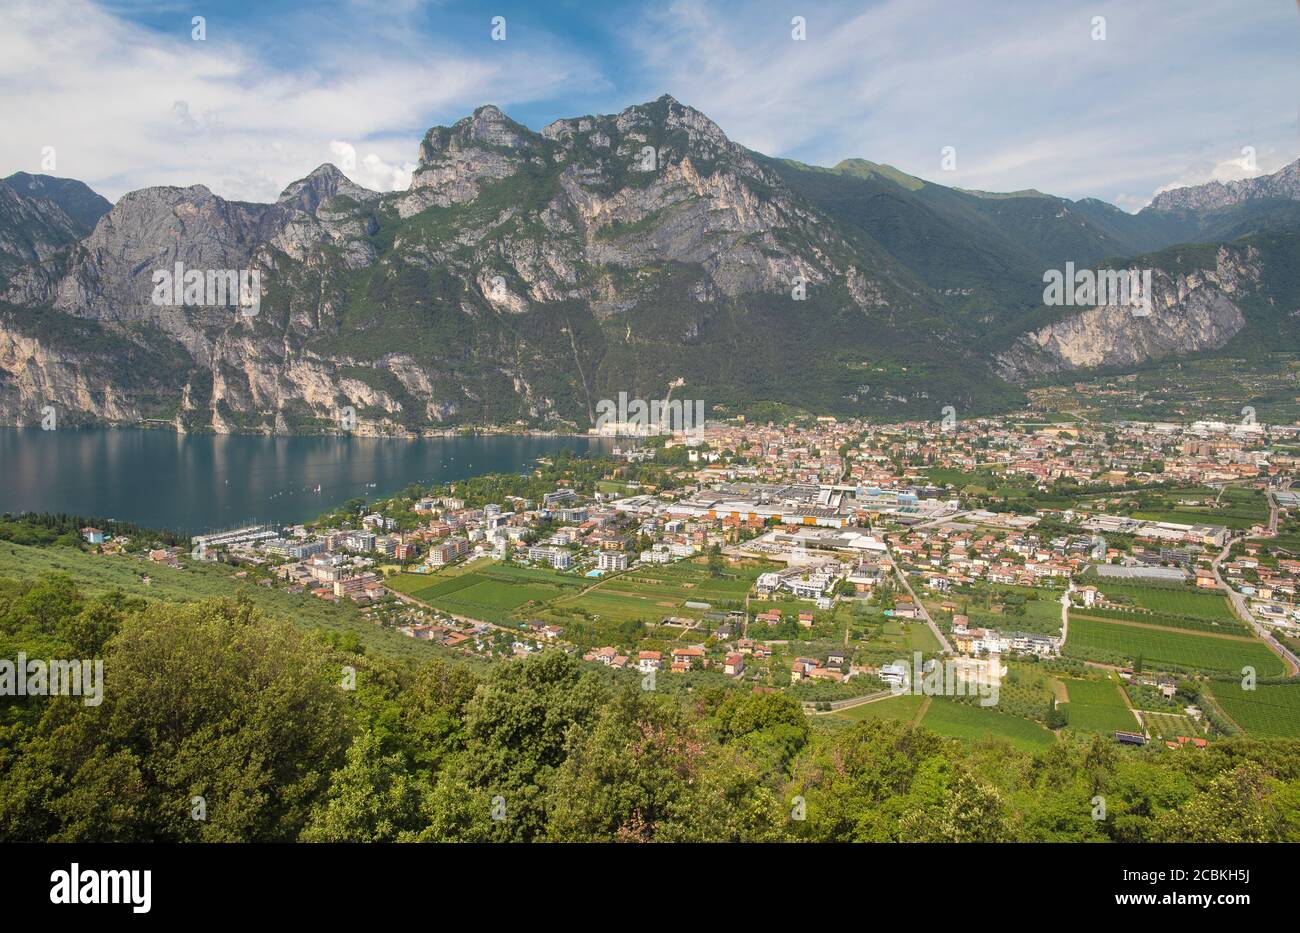 The Riva del Garda and Lago di Garda lake. Stock Photo